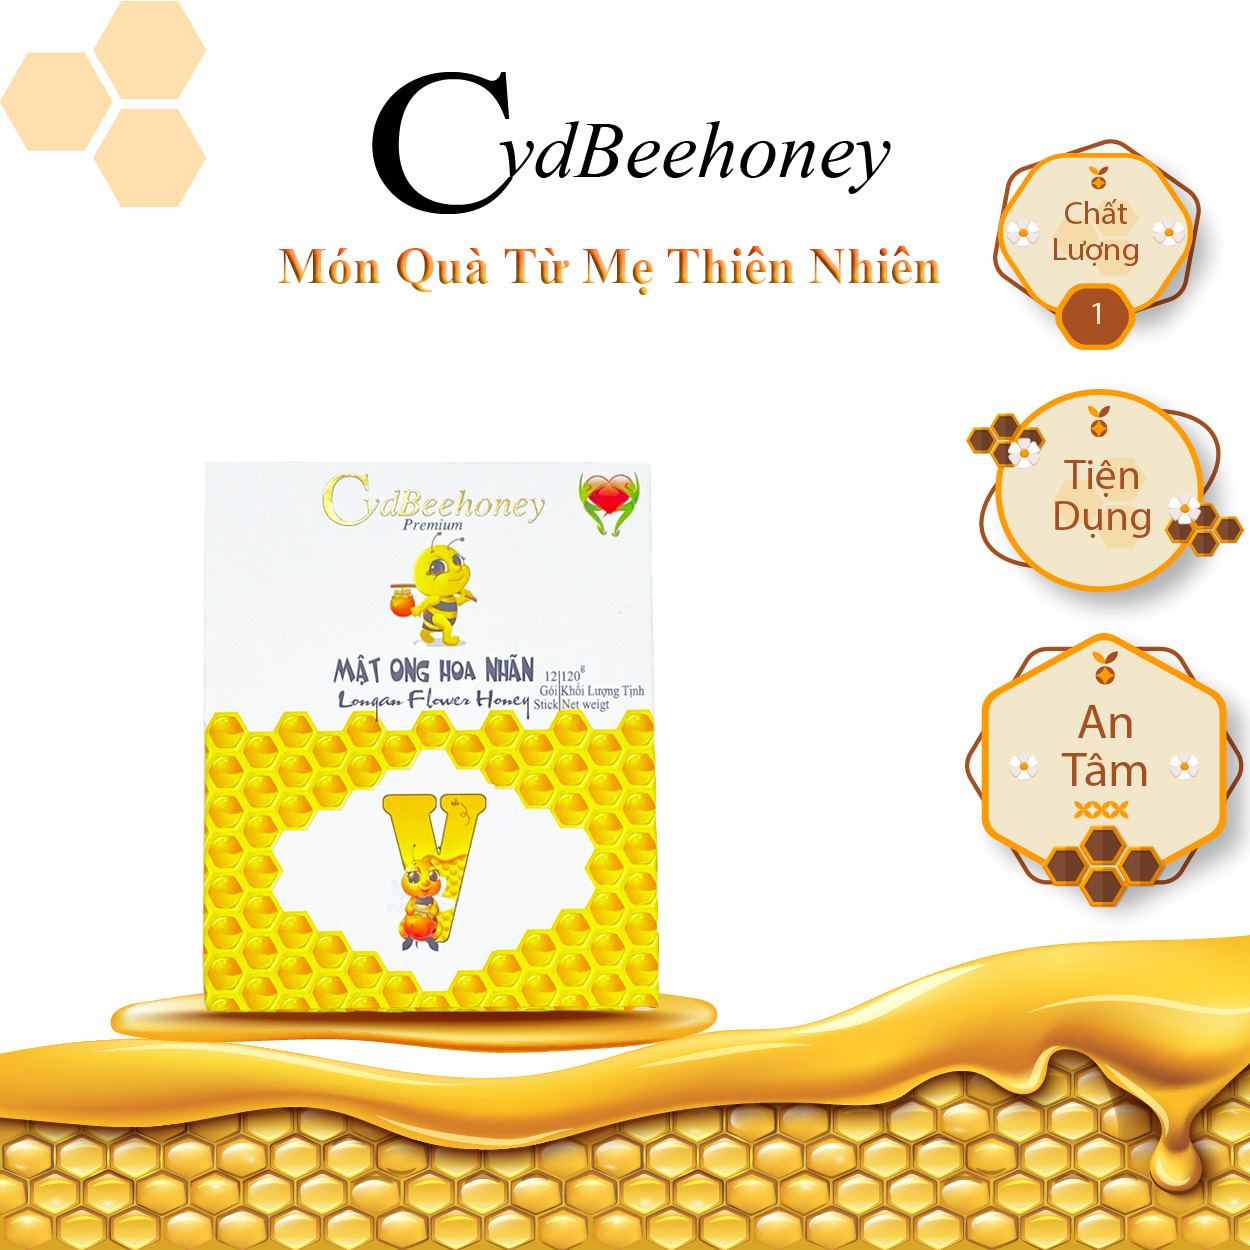 Hộp Mật ong hoa nhãn 120g Cvdbeehoney - Longan flower honey 120g Cvdbeehoney